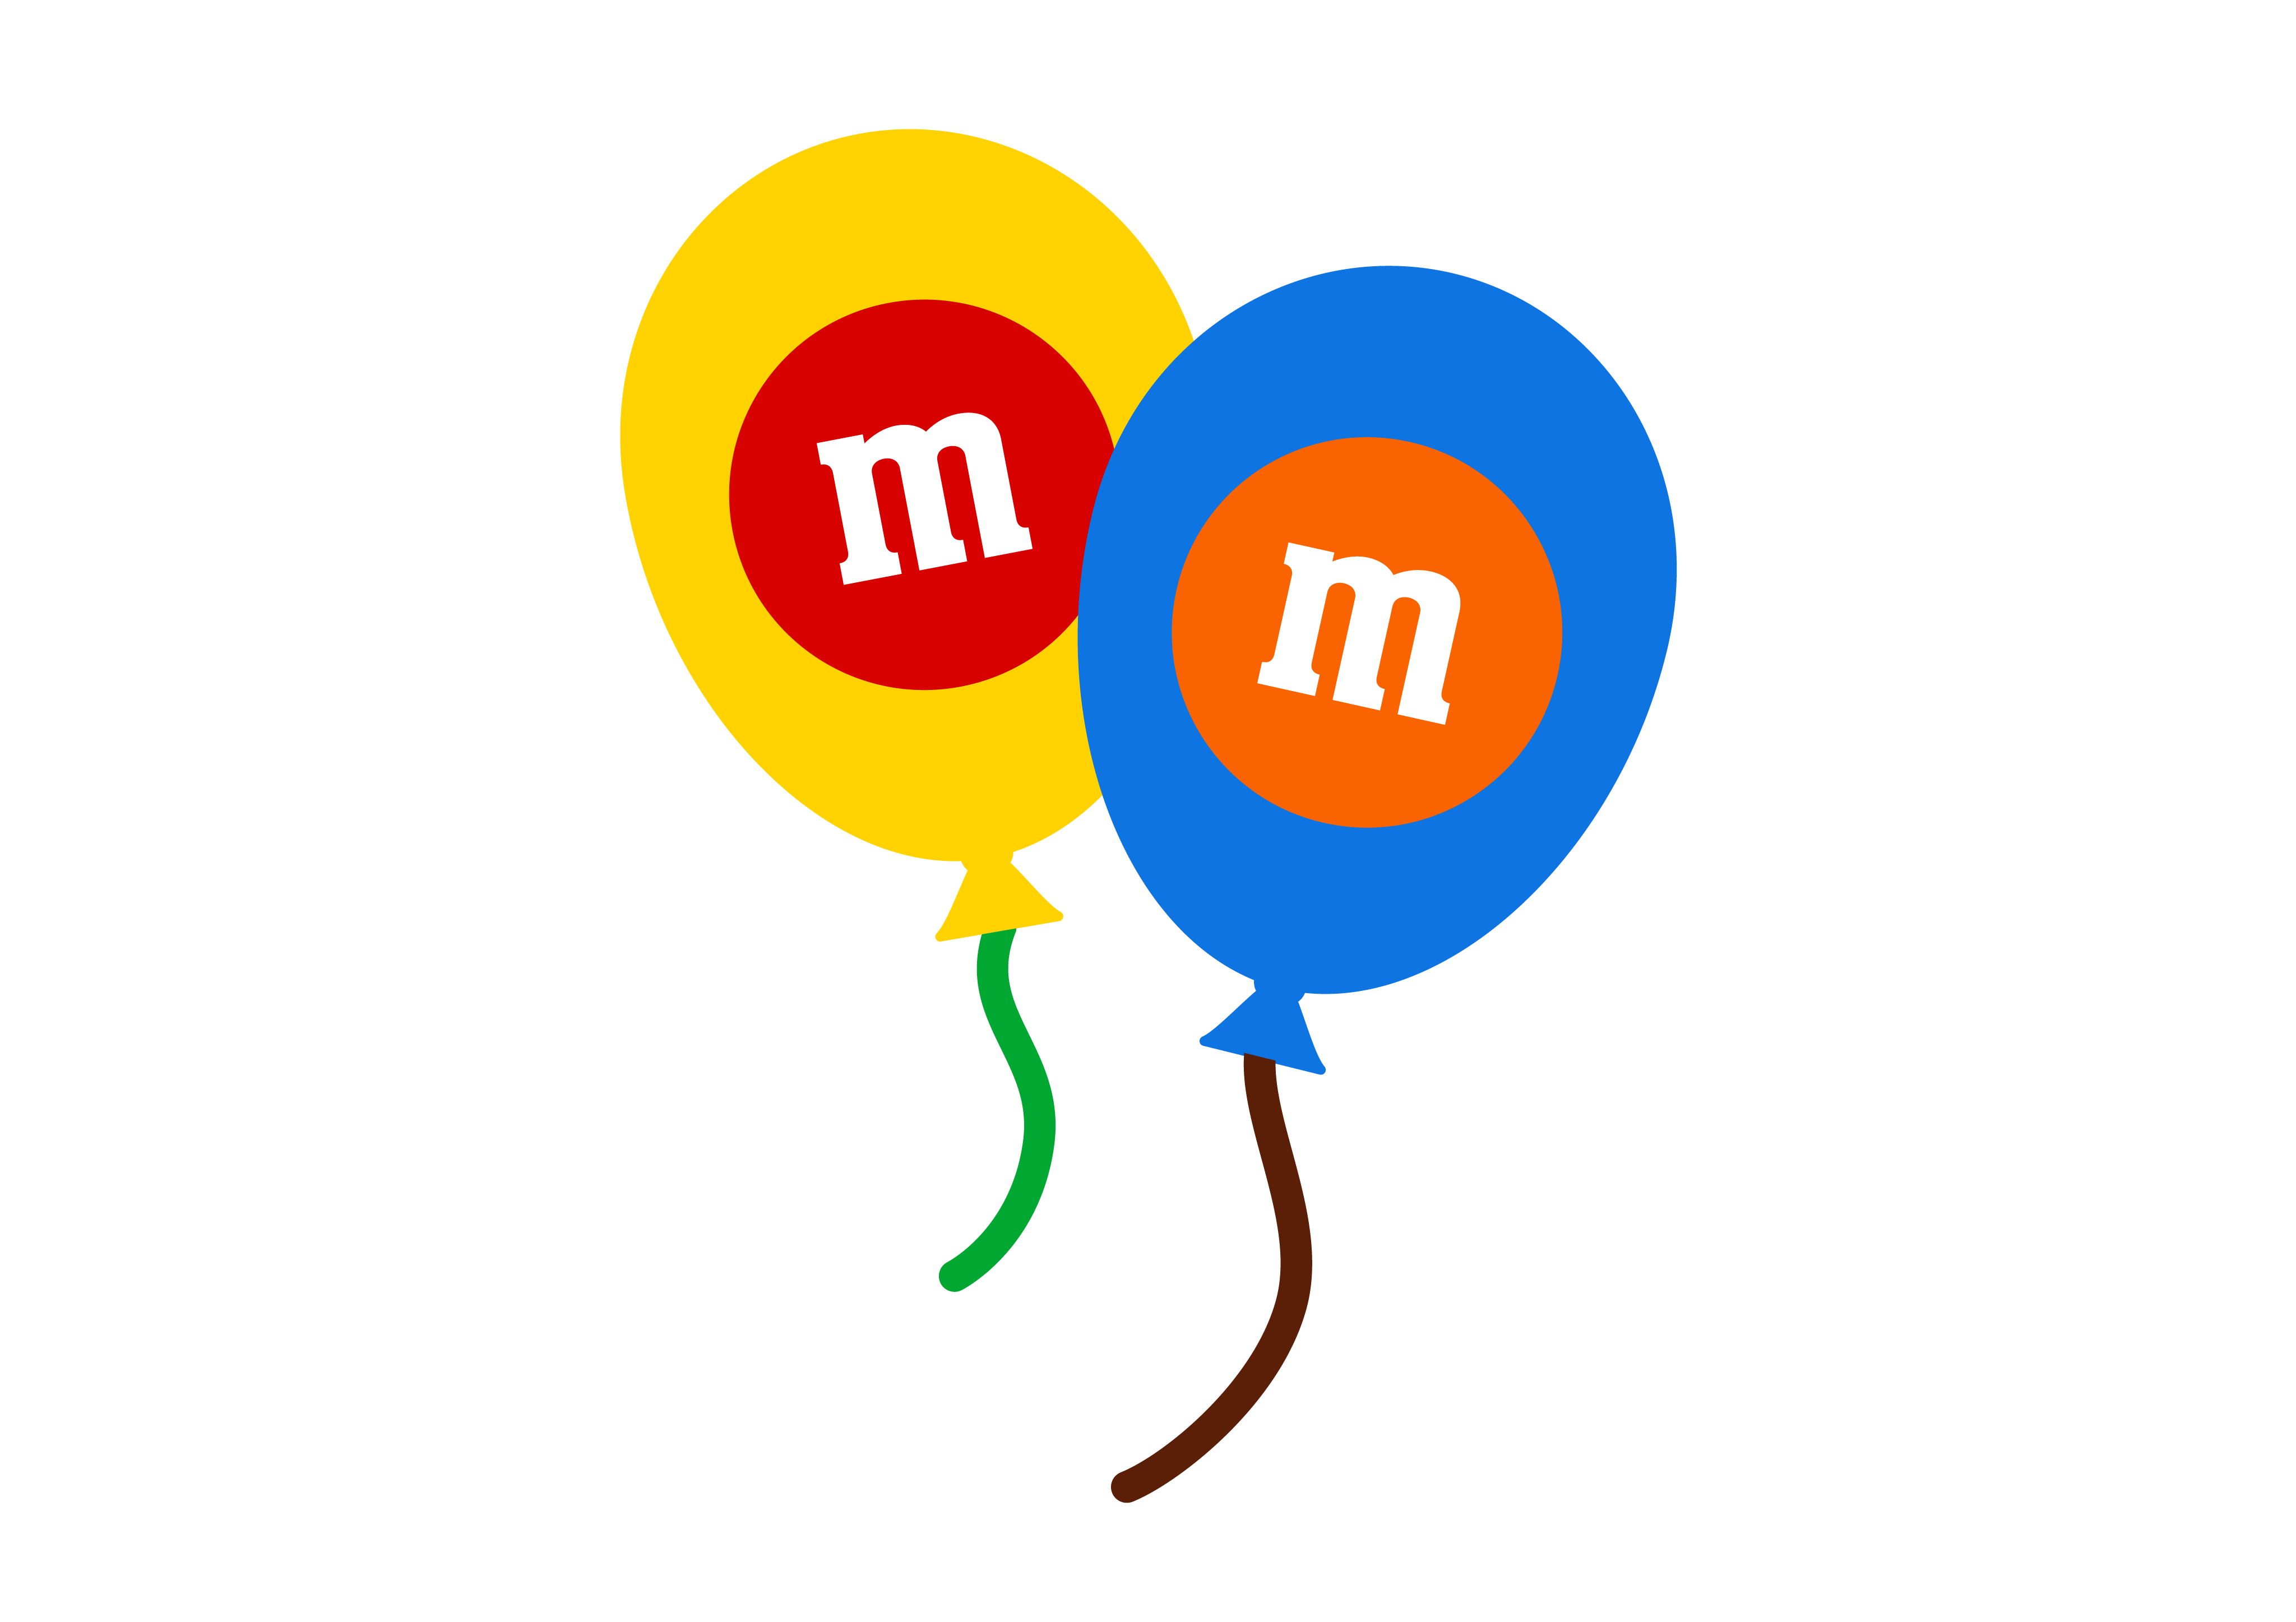 m&m theme birthday party 🎉🍬 my daughter's 1st birthday was amazing!!